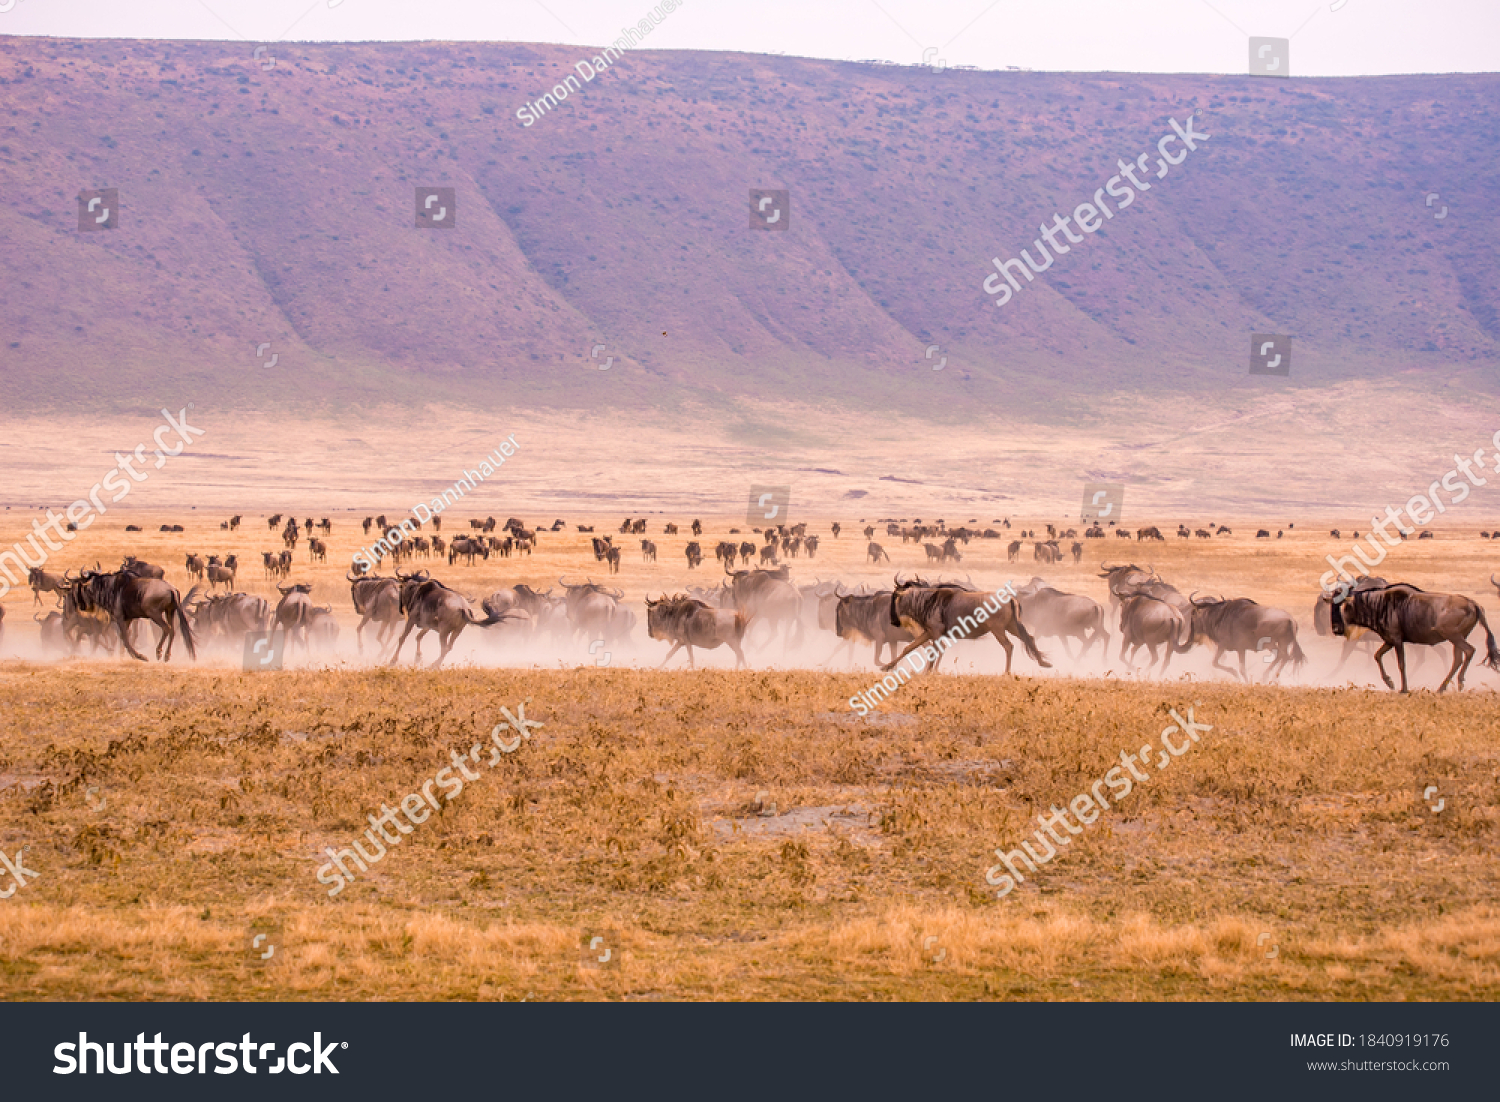 Herd of gnus and wildebeests in the Ngorongoro crater National Park, Wildlife safari in Tanzania, Africa. #1840919176